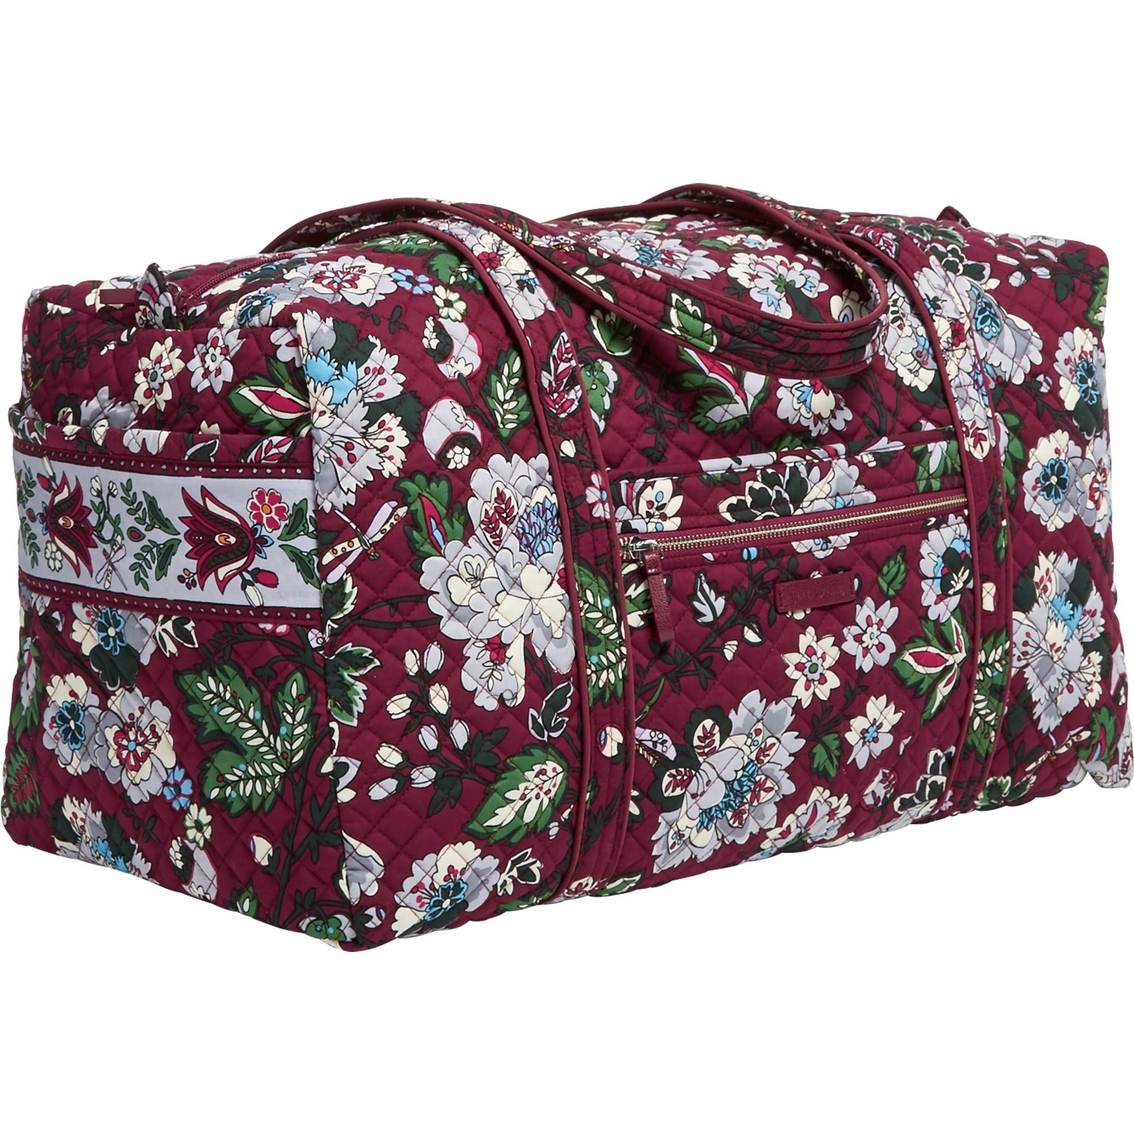 Vera Bradley Iconic Large Travel Duffel, Bordeaux Blooms | Luggage